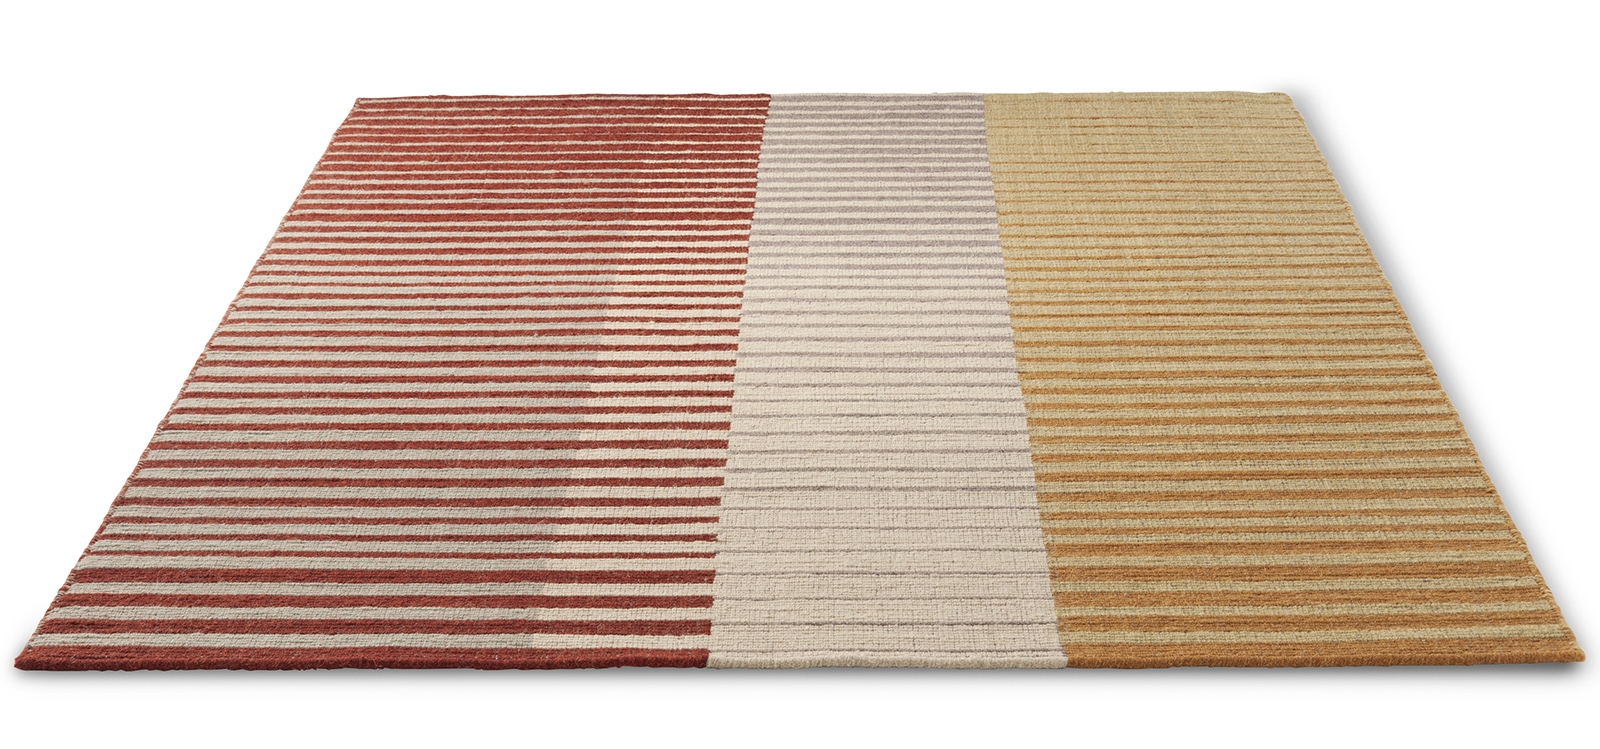 Center Stirped Wool Rug ☞ Size: 140 x 200 cm